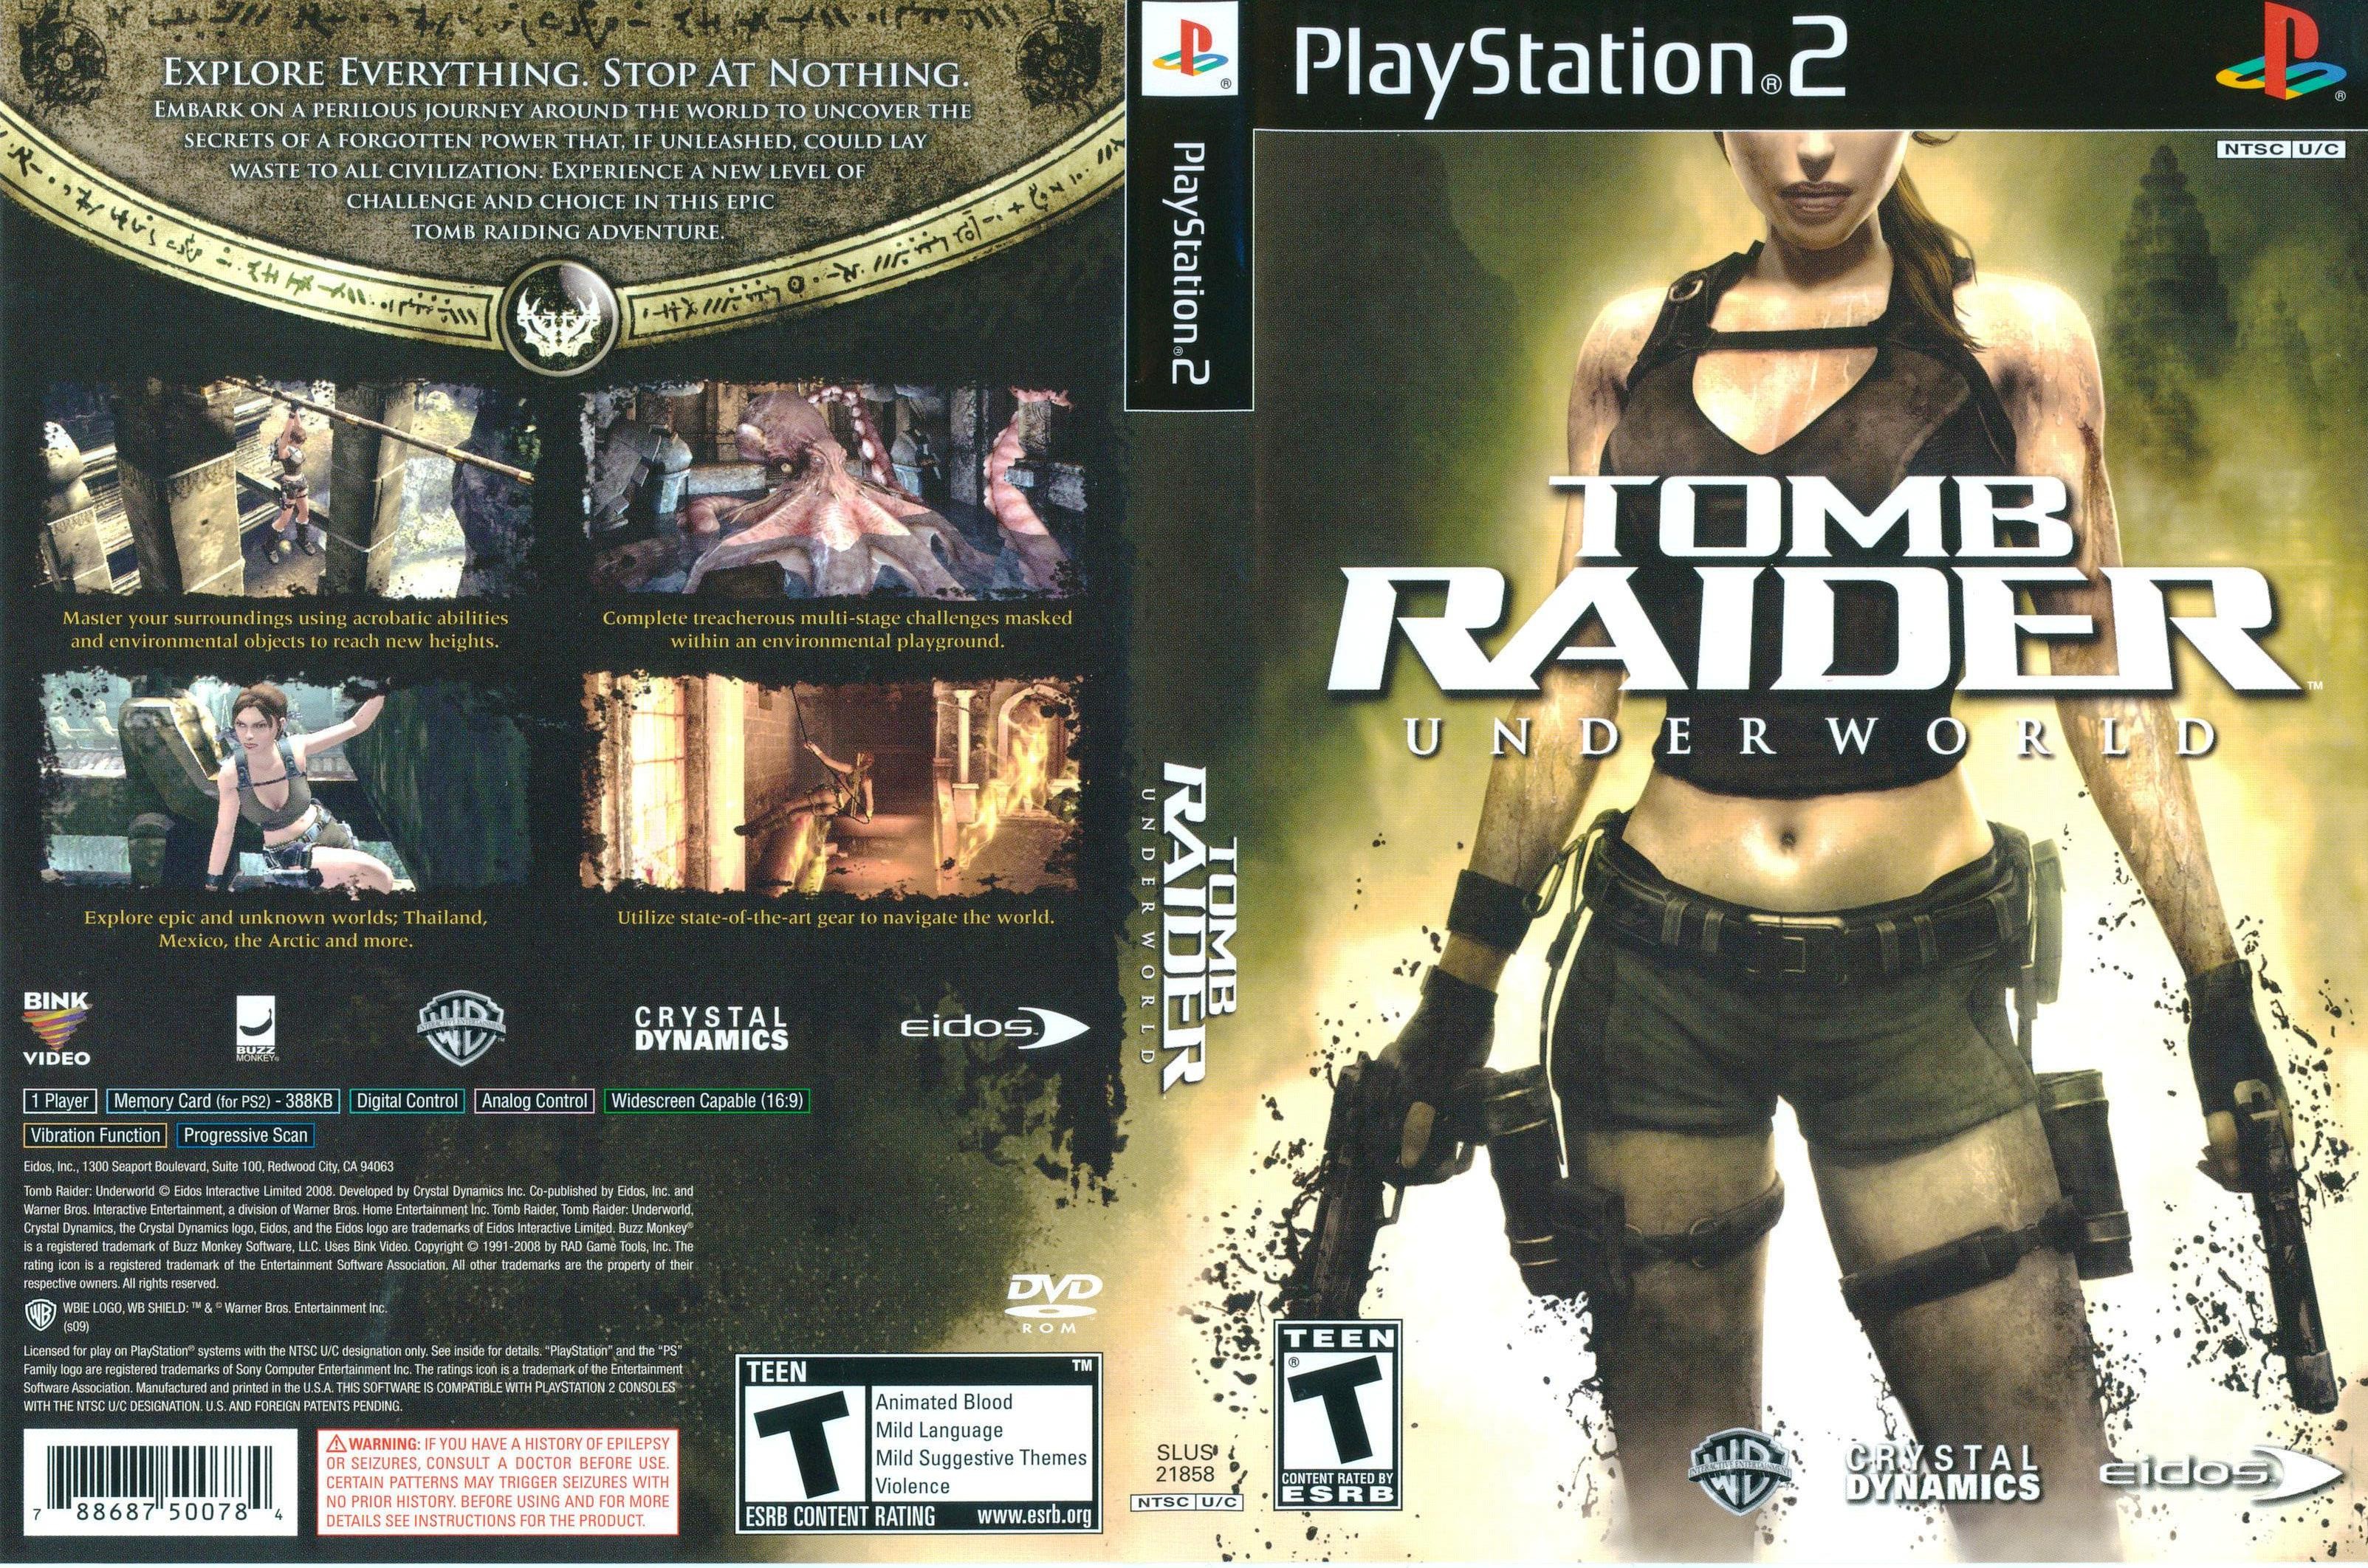 Lara Croft - Tomb Raider - Underworld PS2 cover.